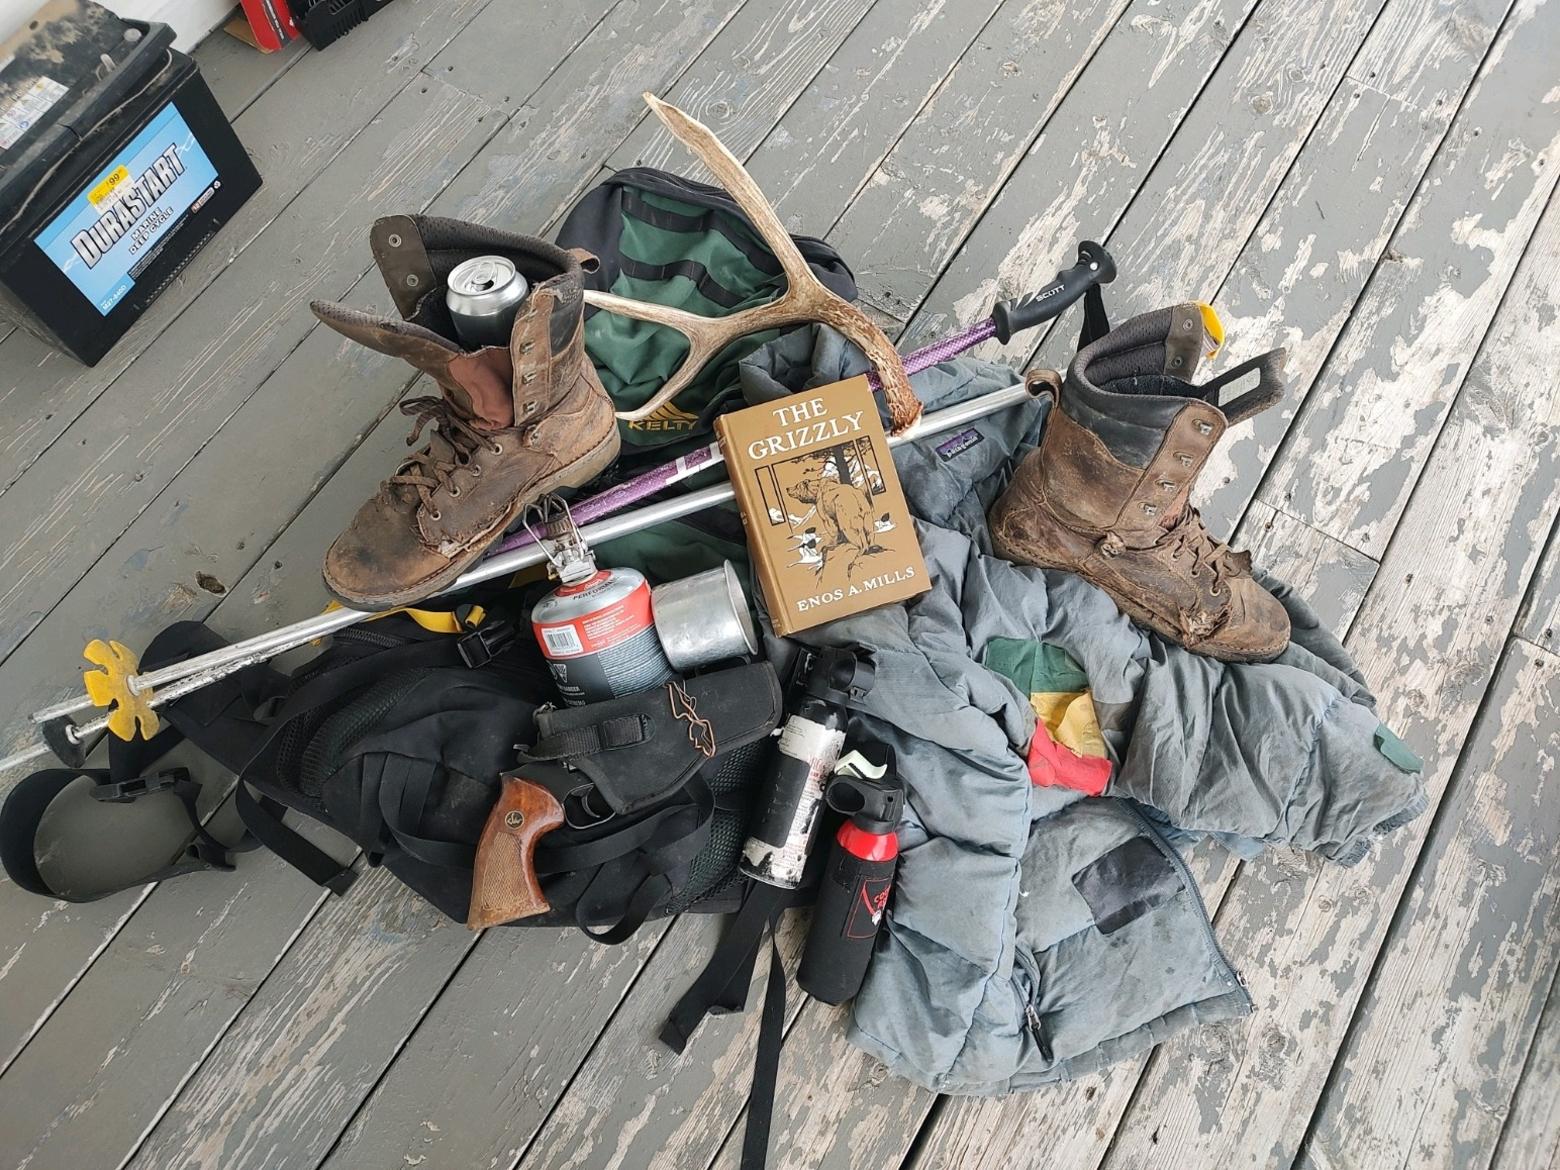 A backcountry hiker's gear. Photo courtesy Keegan David